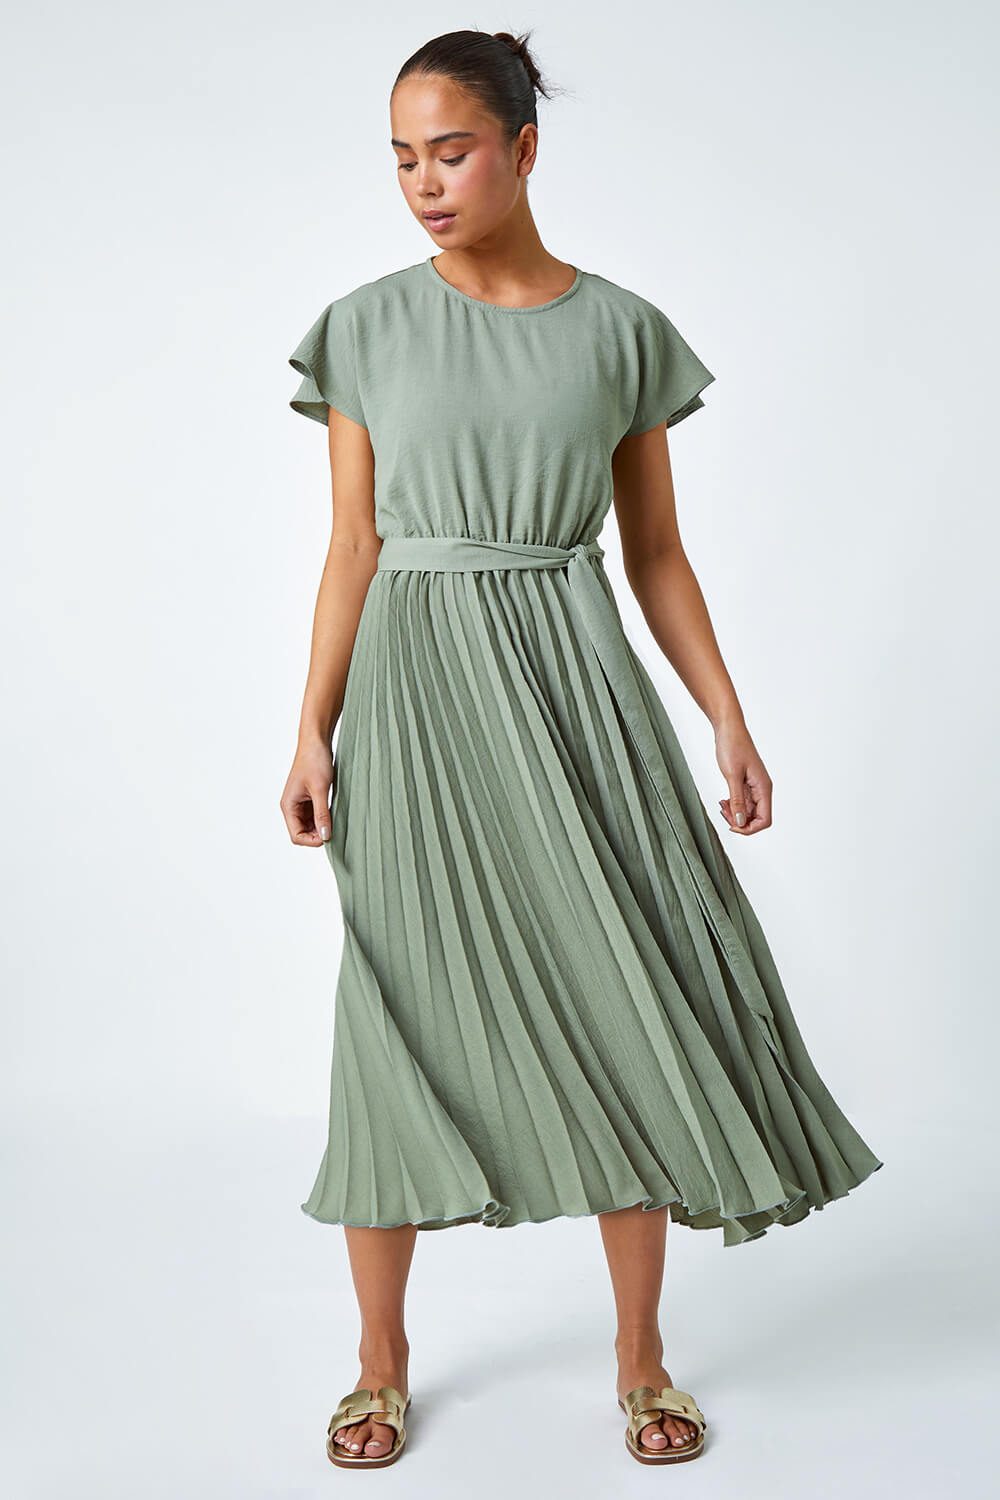 KHAKI Petite Plain Pleated Skirt Midi Dress, Image 2 of 5